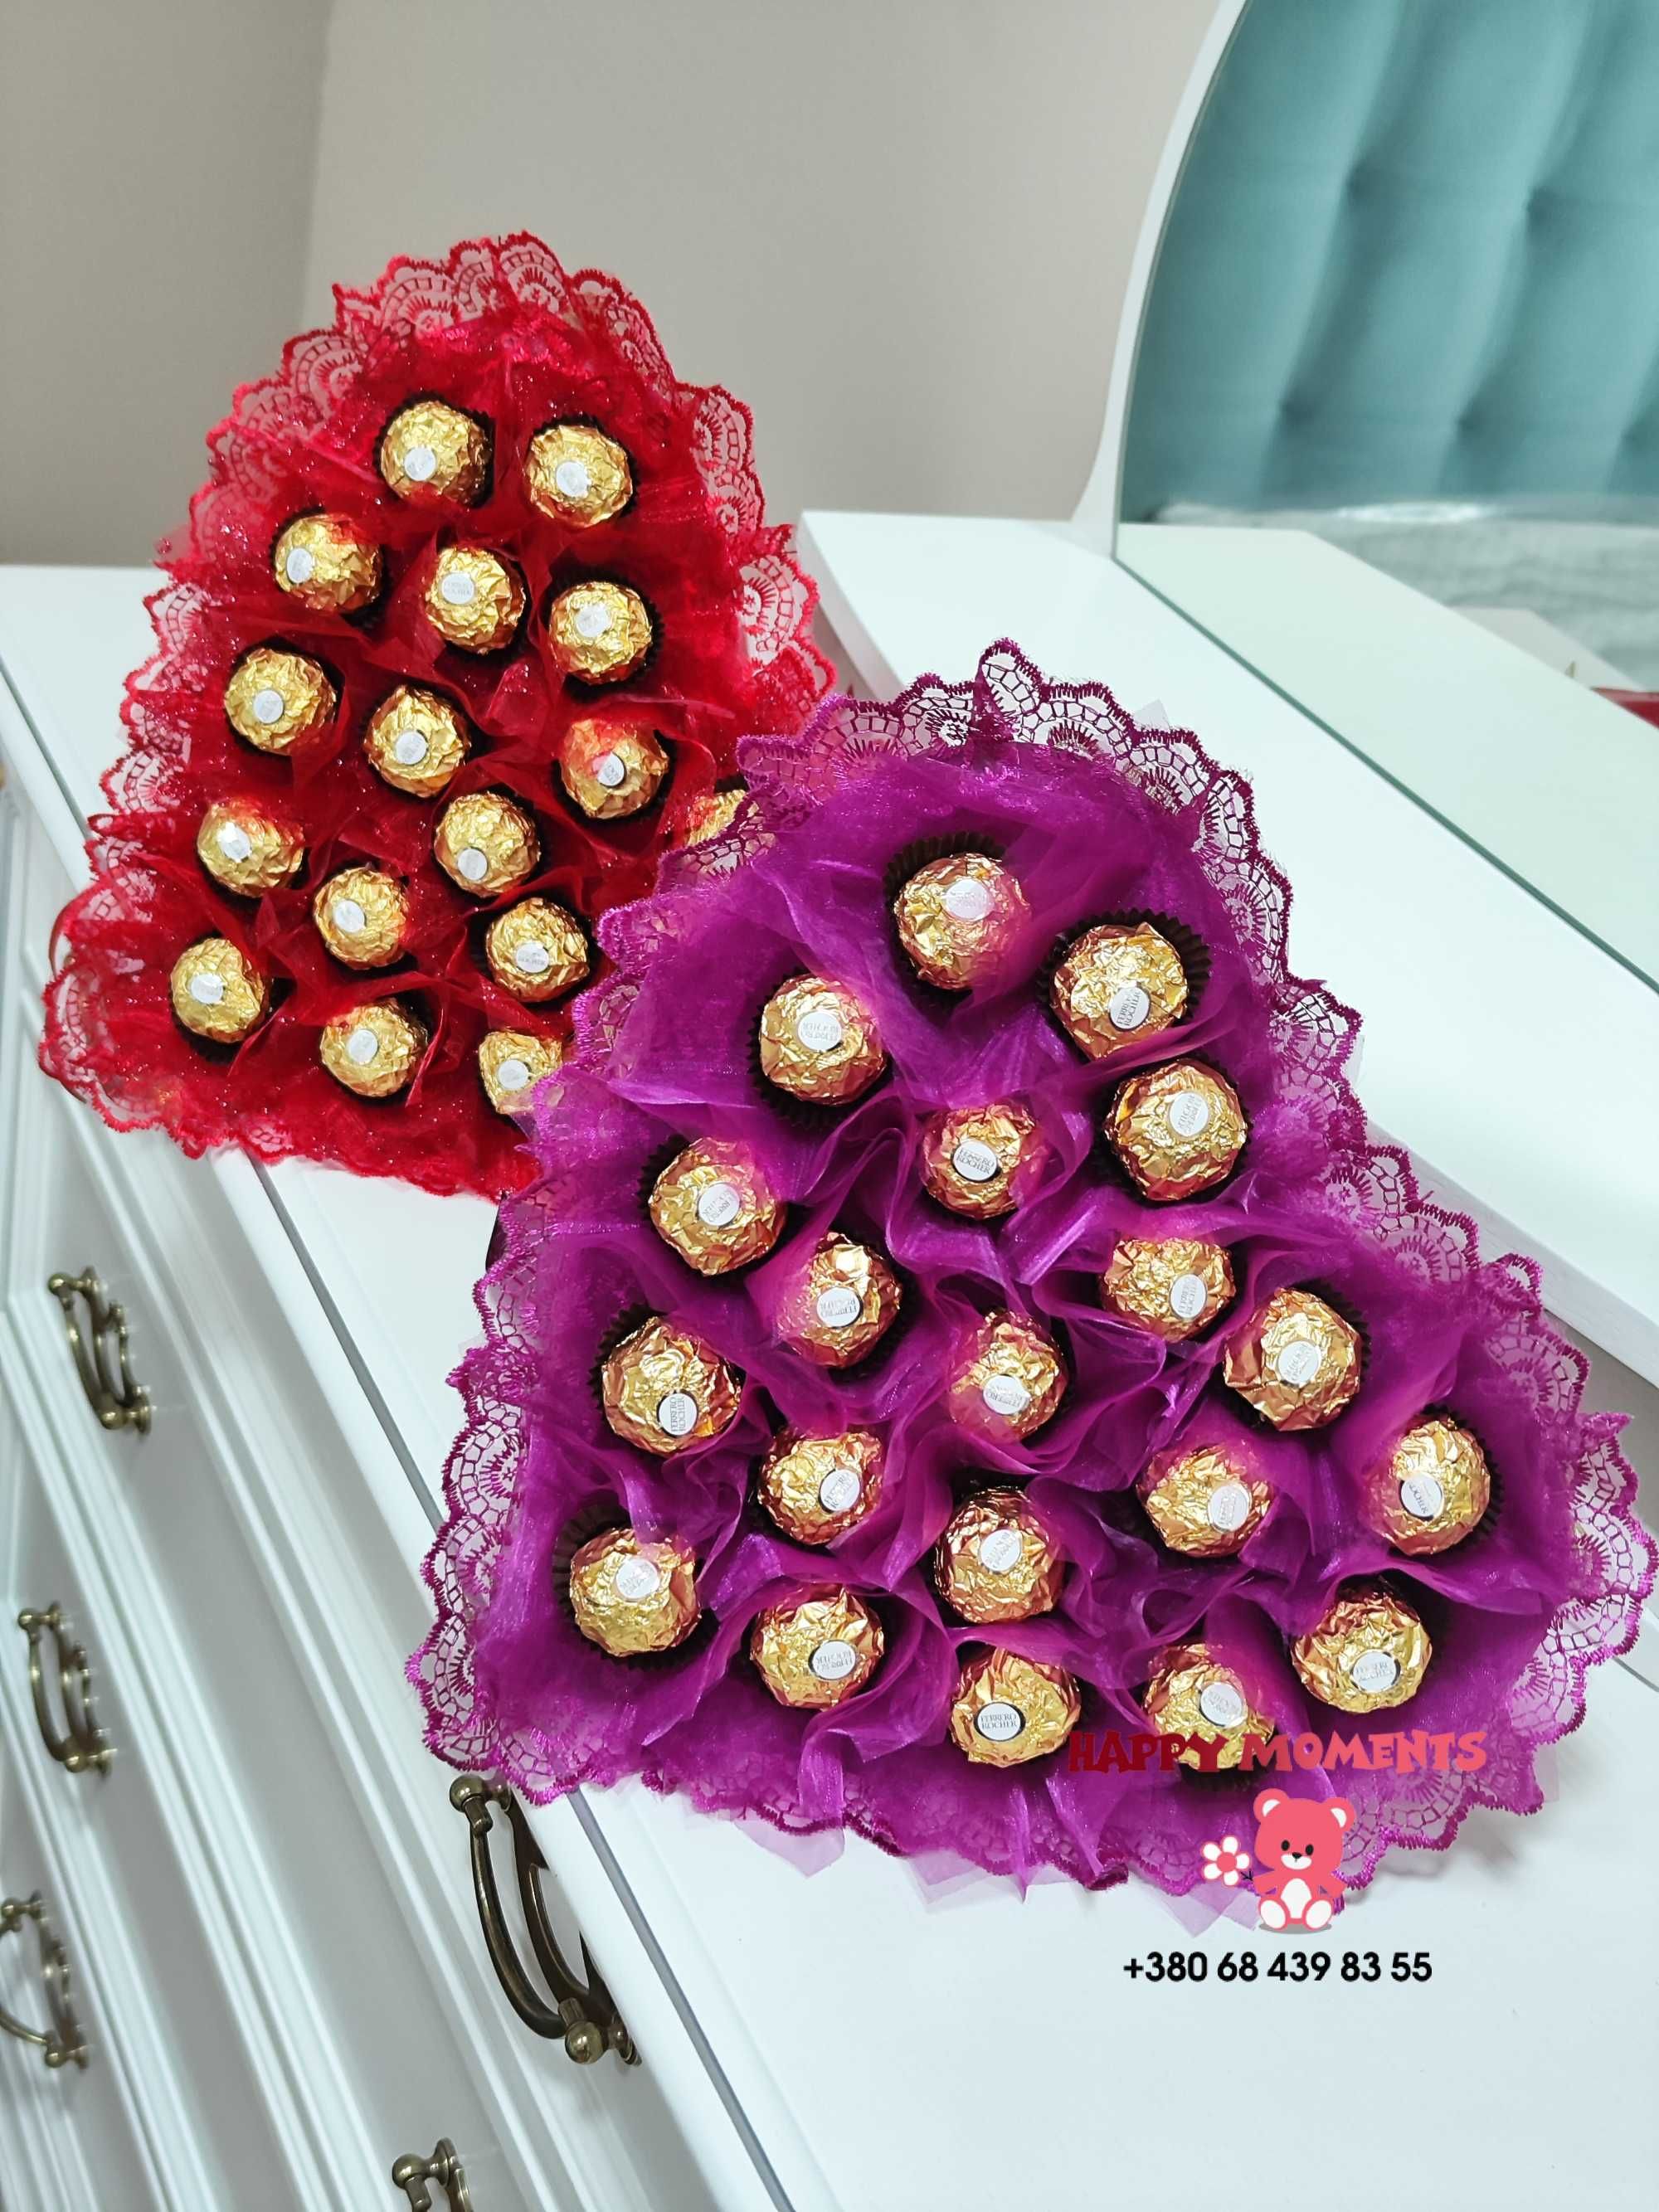 Букет із цукерками Ferrero Rocher у формі серця на день закоханих